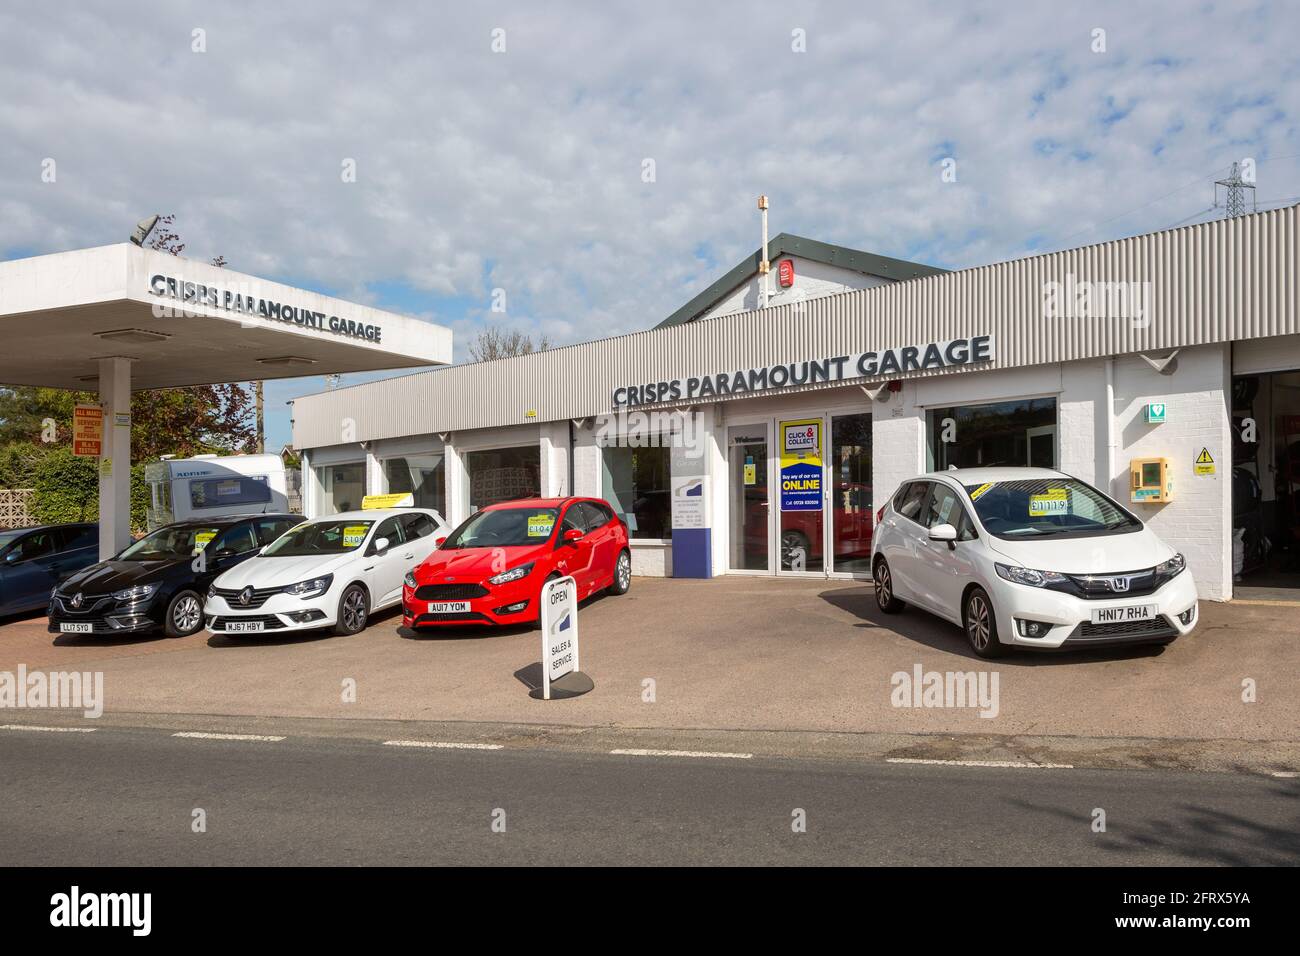 Second hand car sales on garage forecourt of motor dealership, Crisps Paramount Garage, Knodishall, Suffolk, England, UK Stock Photo